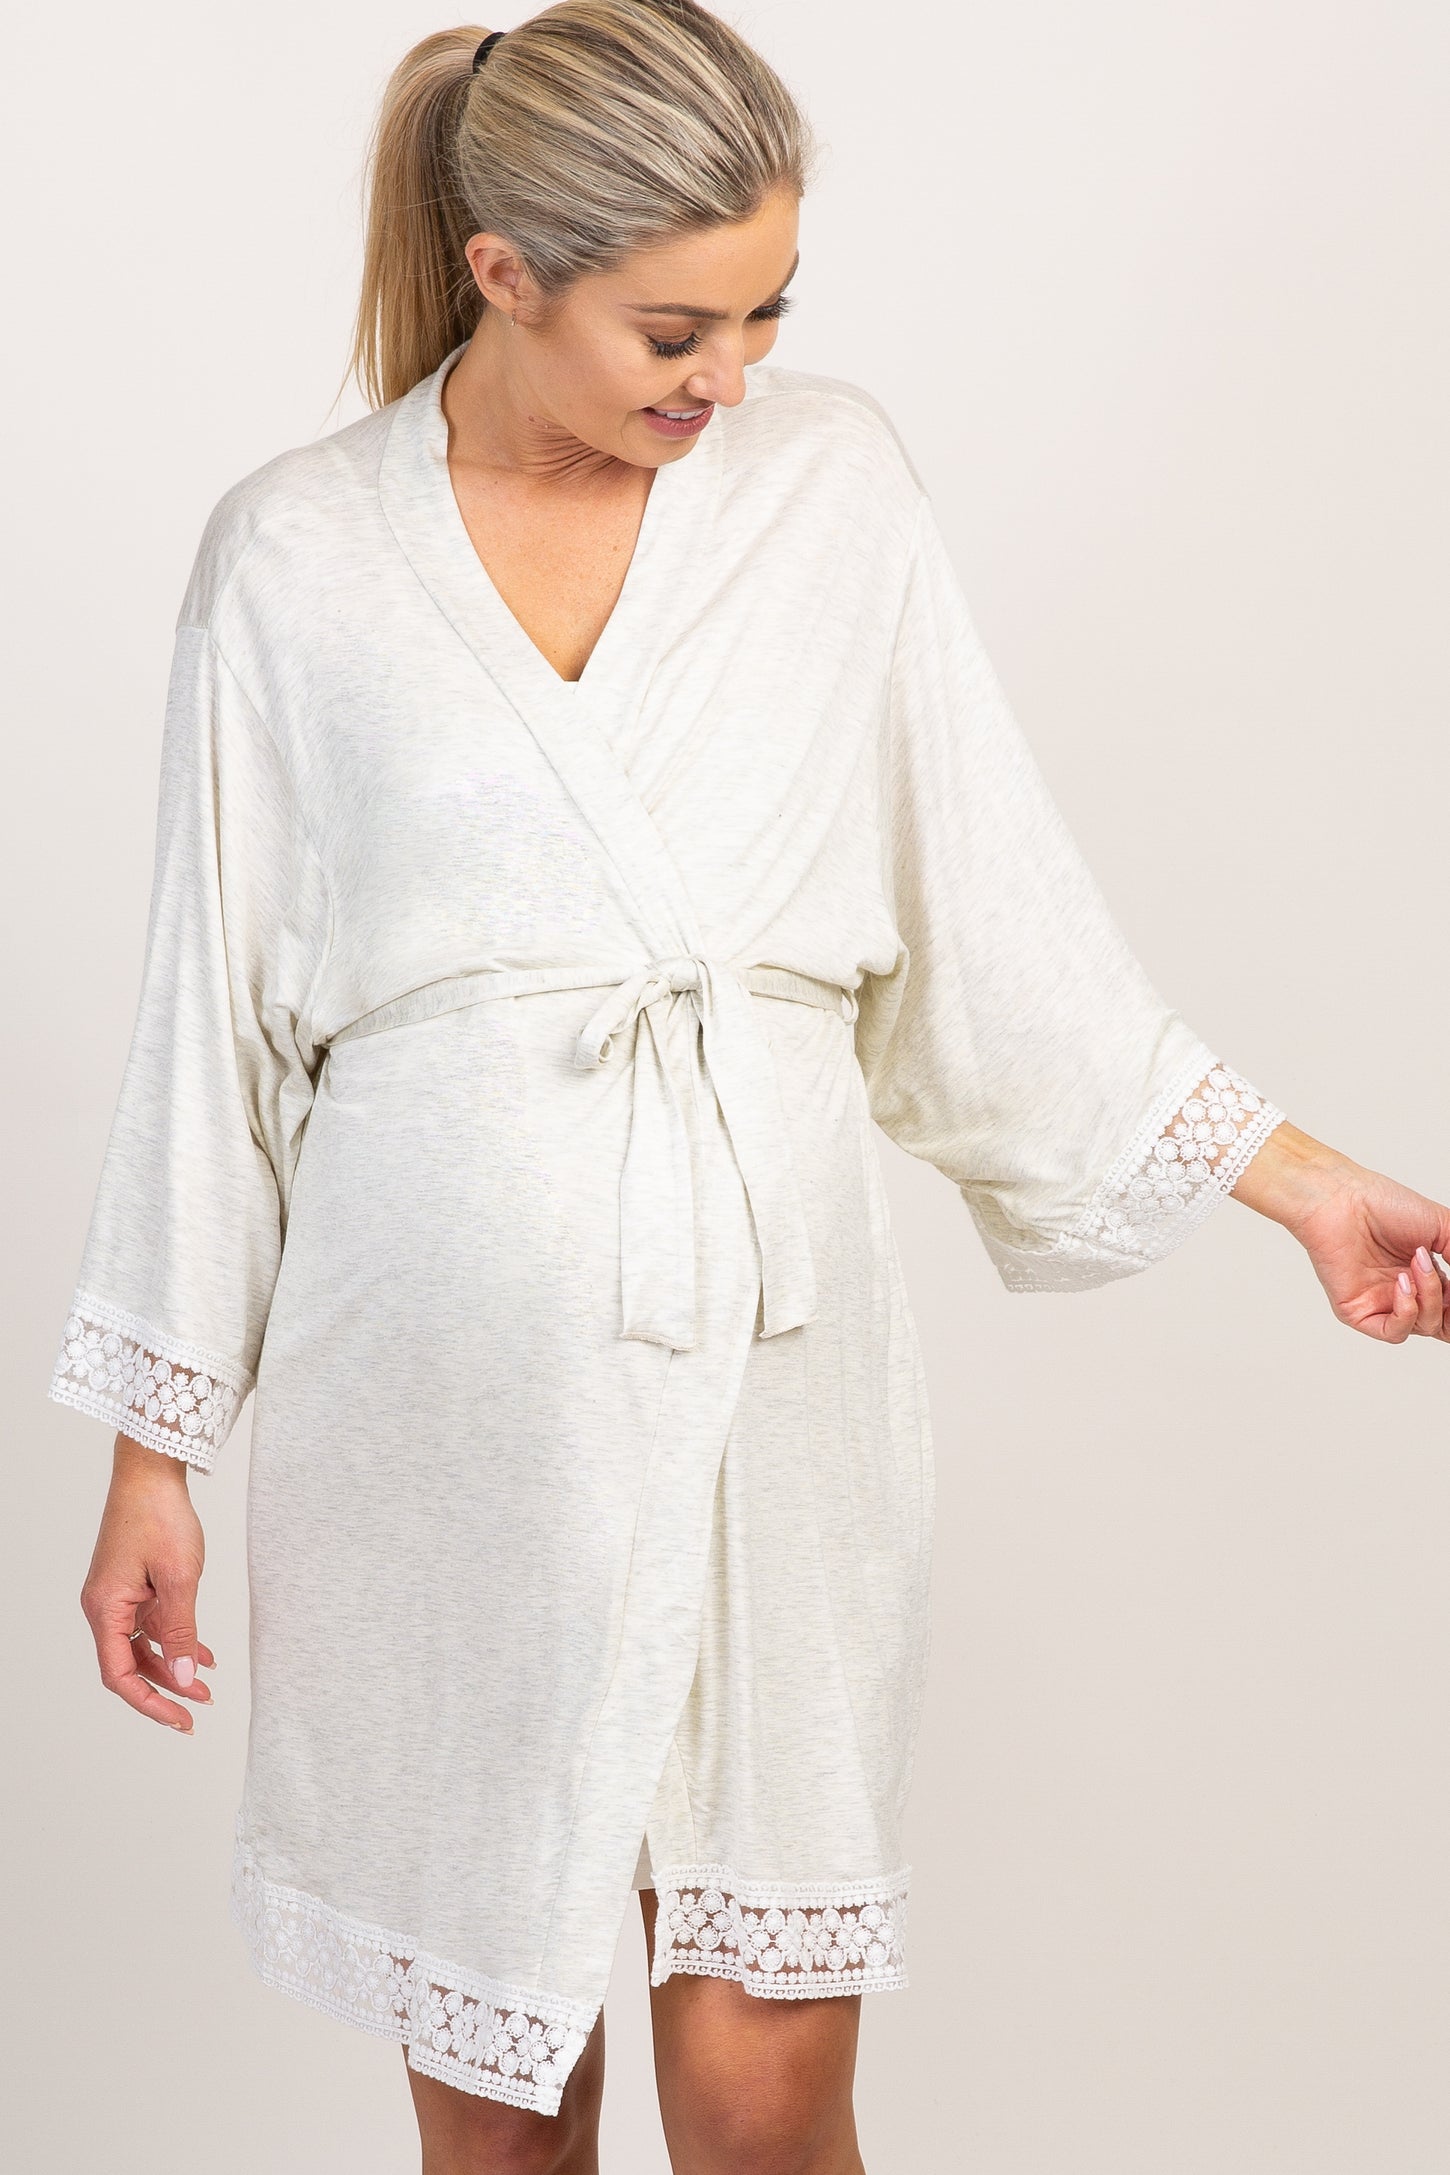 PinkBlush Beige Crochet Trim Delivery/Nursing Maternity Robe